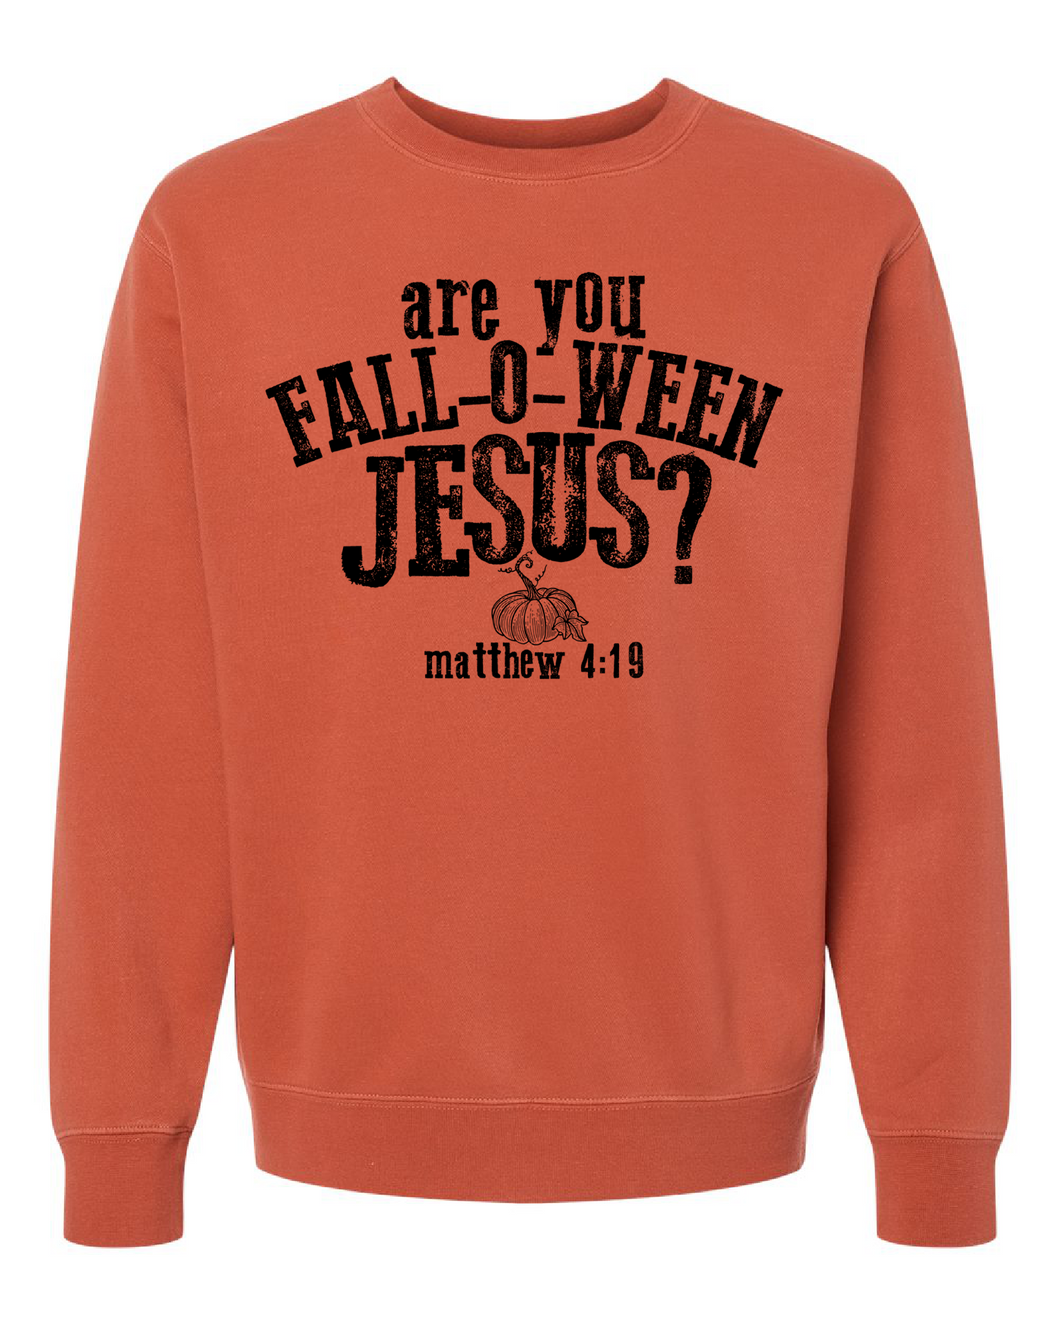 Fall-O-Ween Jesus? Crewneck Sweatshirt